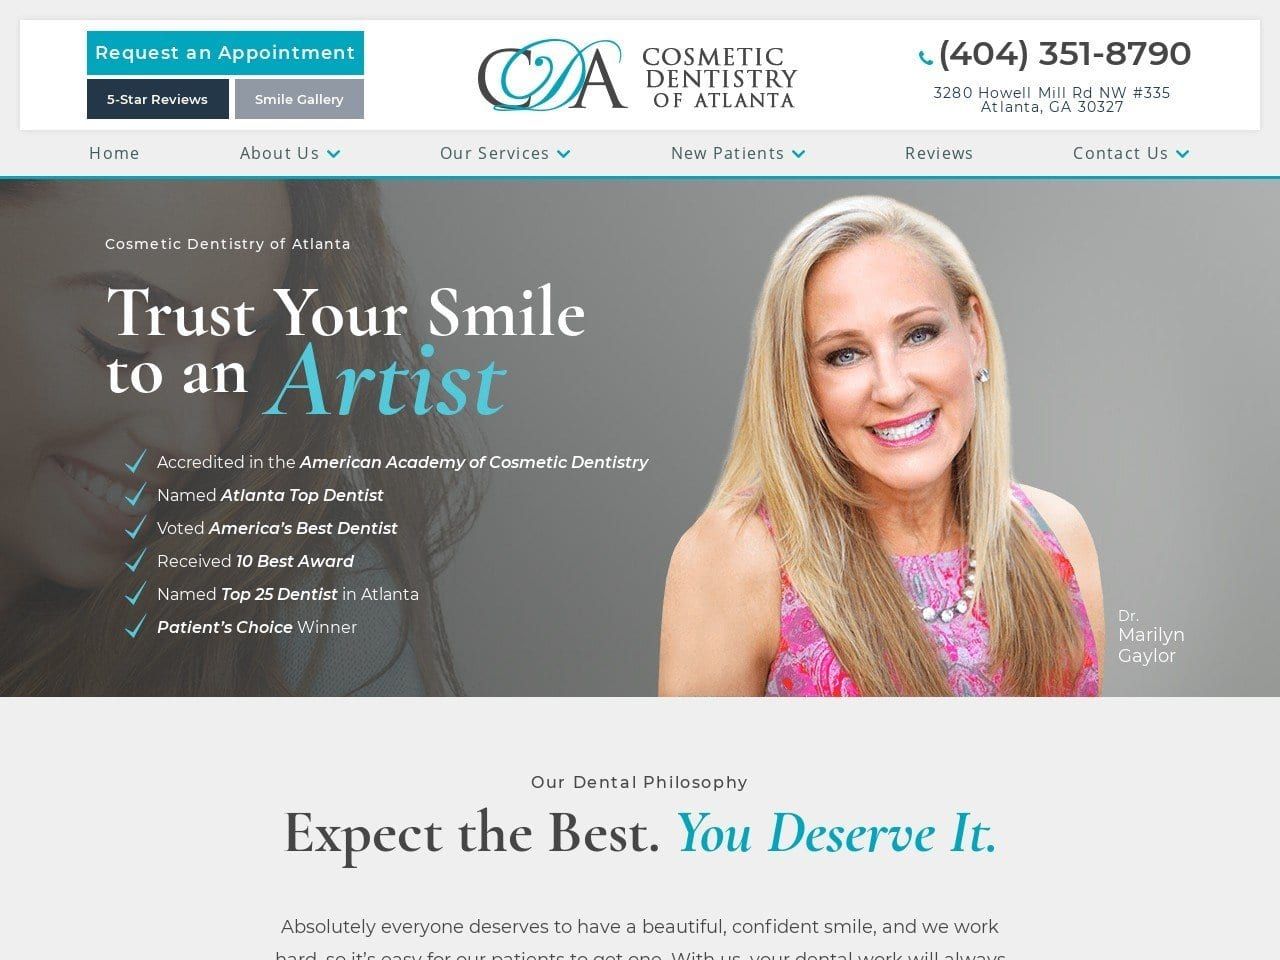 Cosmetic Dentist Website Screenshot from cosmeticdentistryofatlanta.com